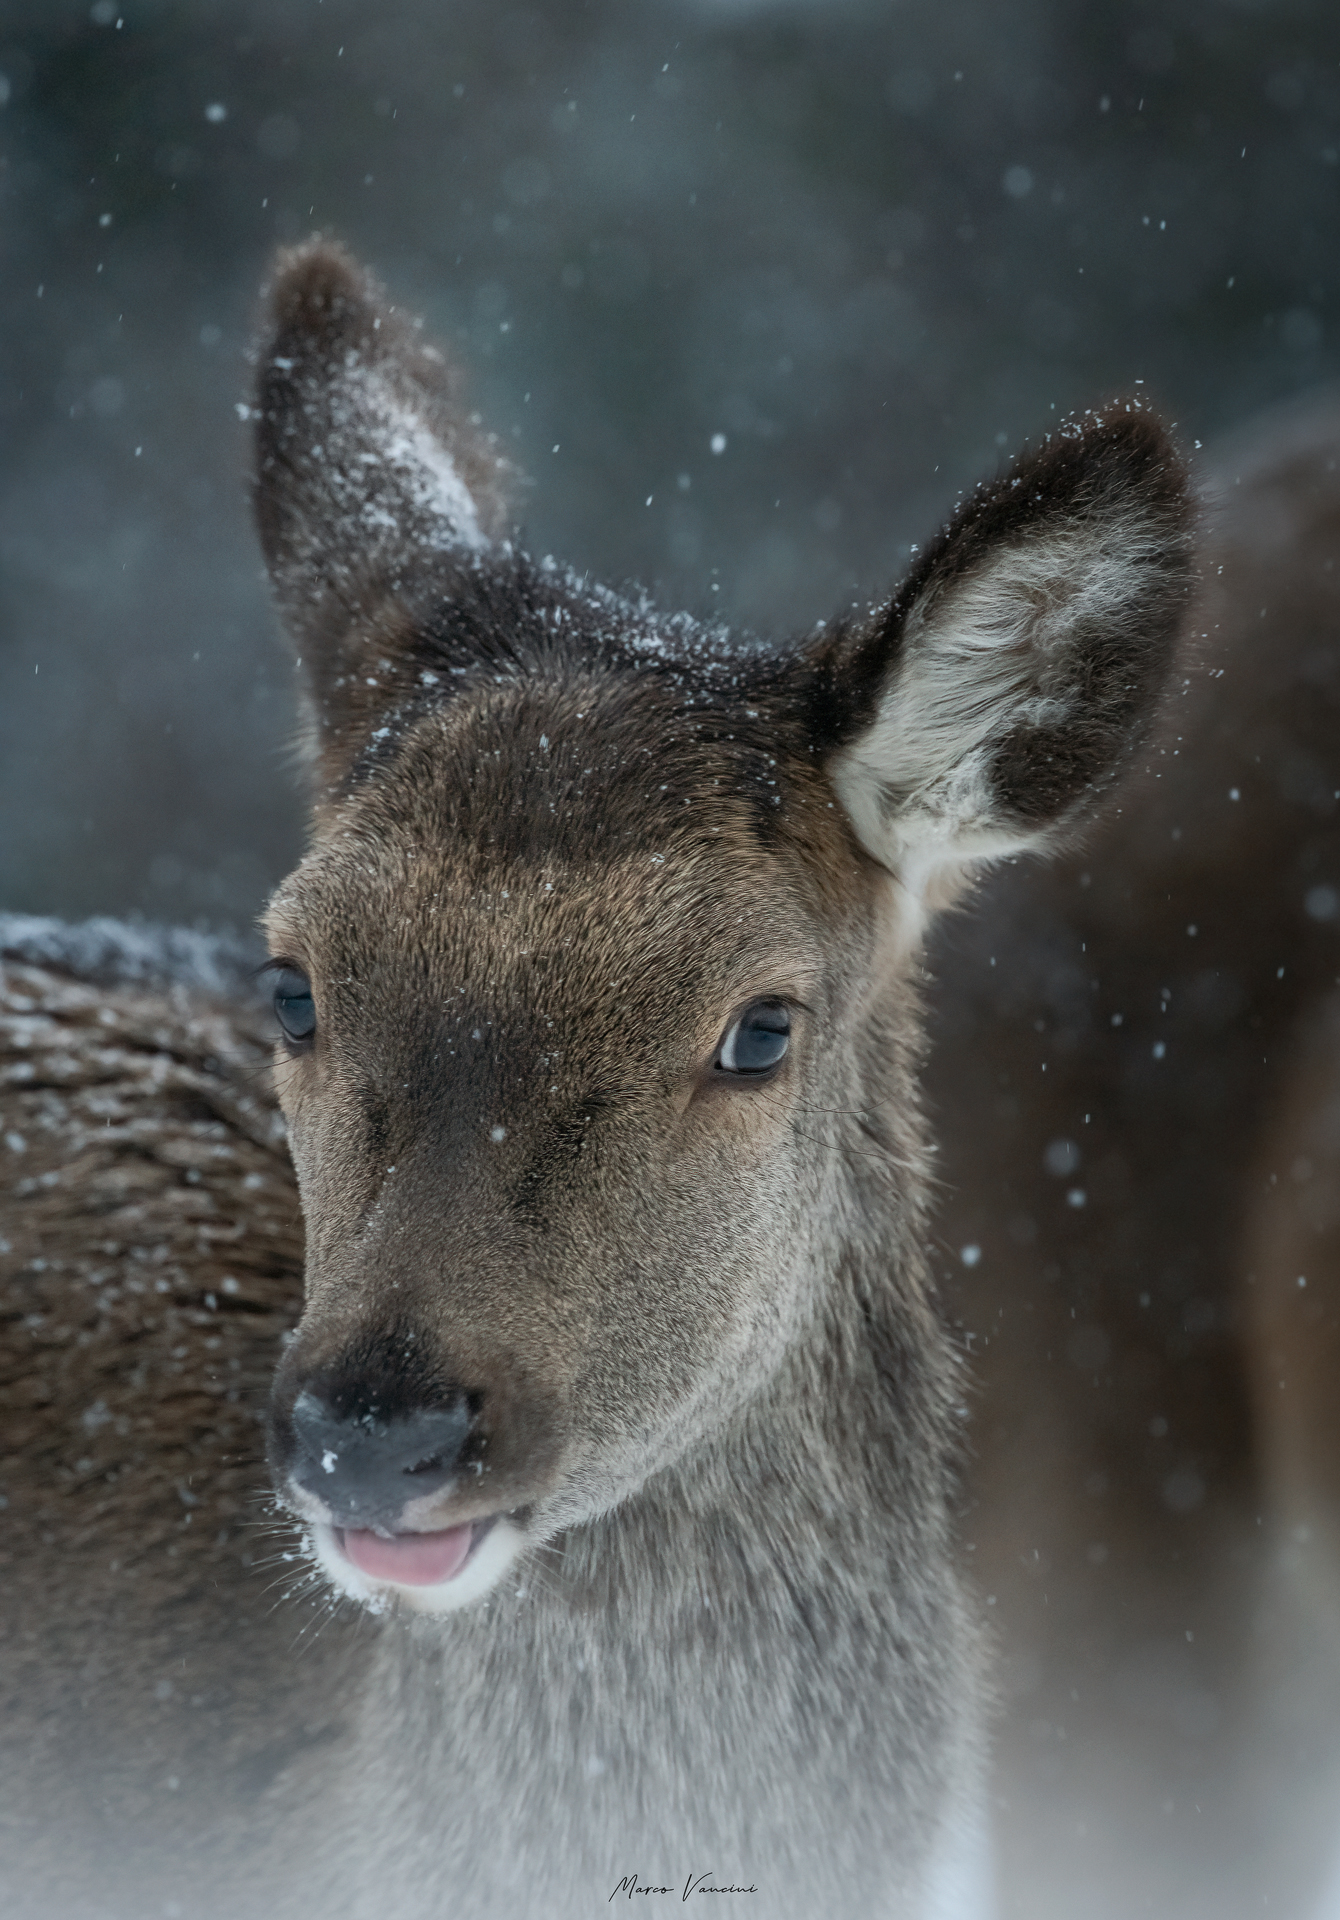 The deer tongue ...